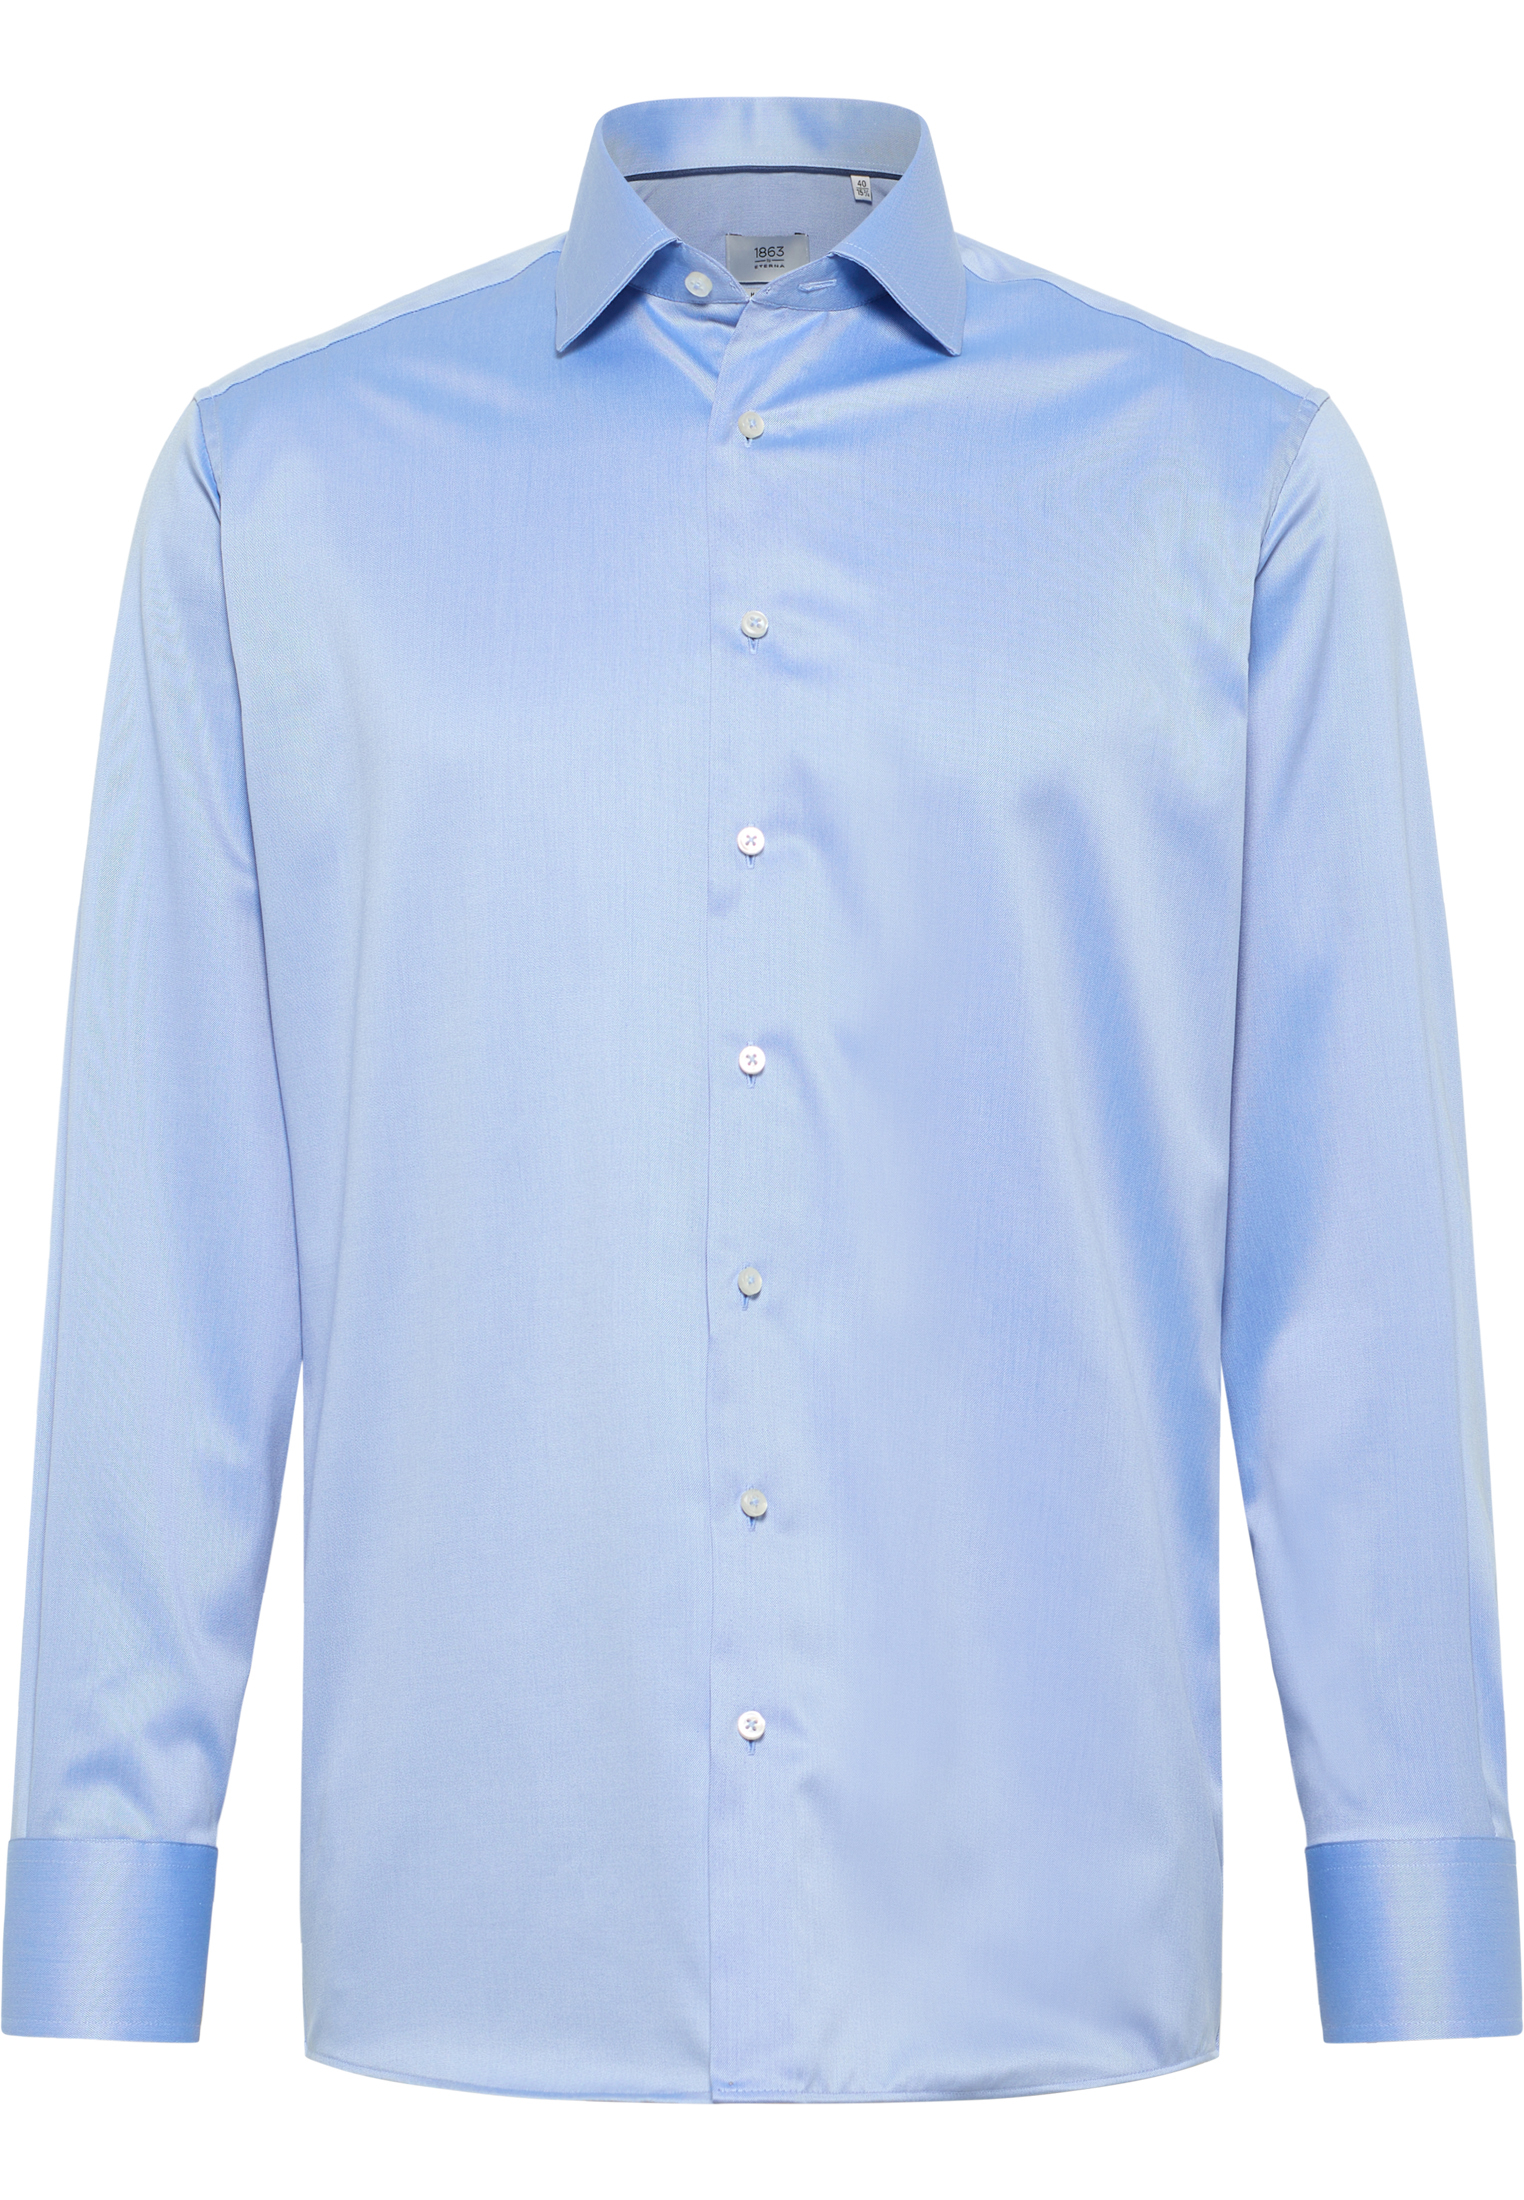 MODERN FIT Luxury Shirt bleu ciel uni